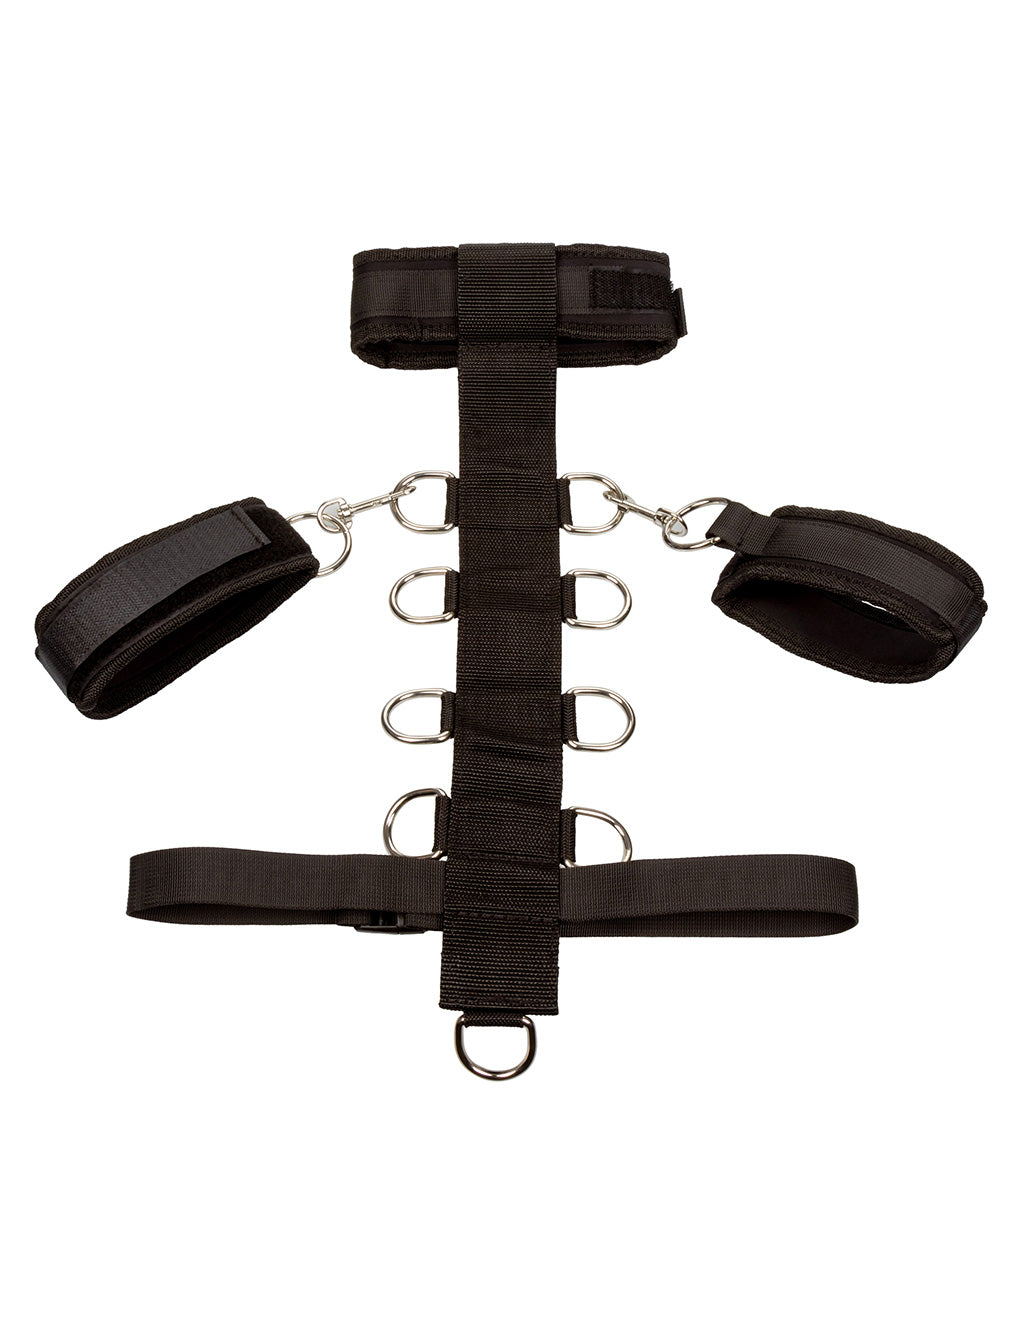 Hustler® 3 Piece Collar and Body Restraint Set- Closed cuffs